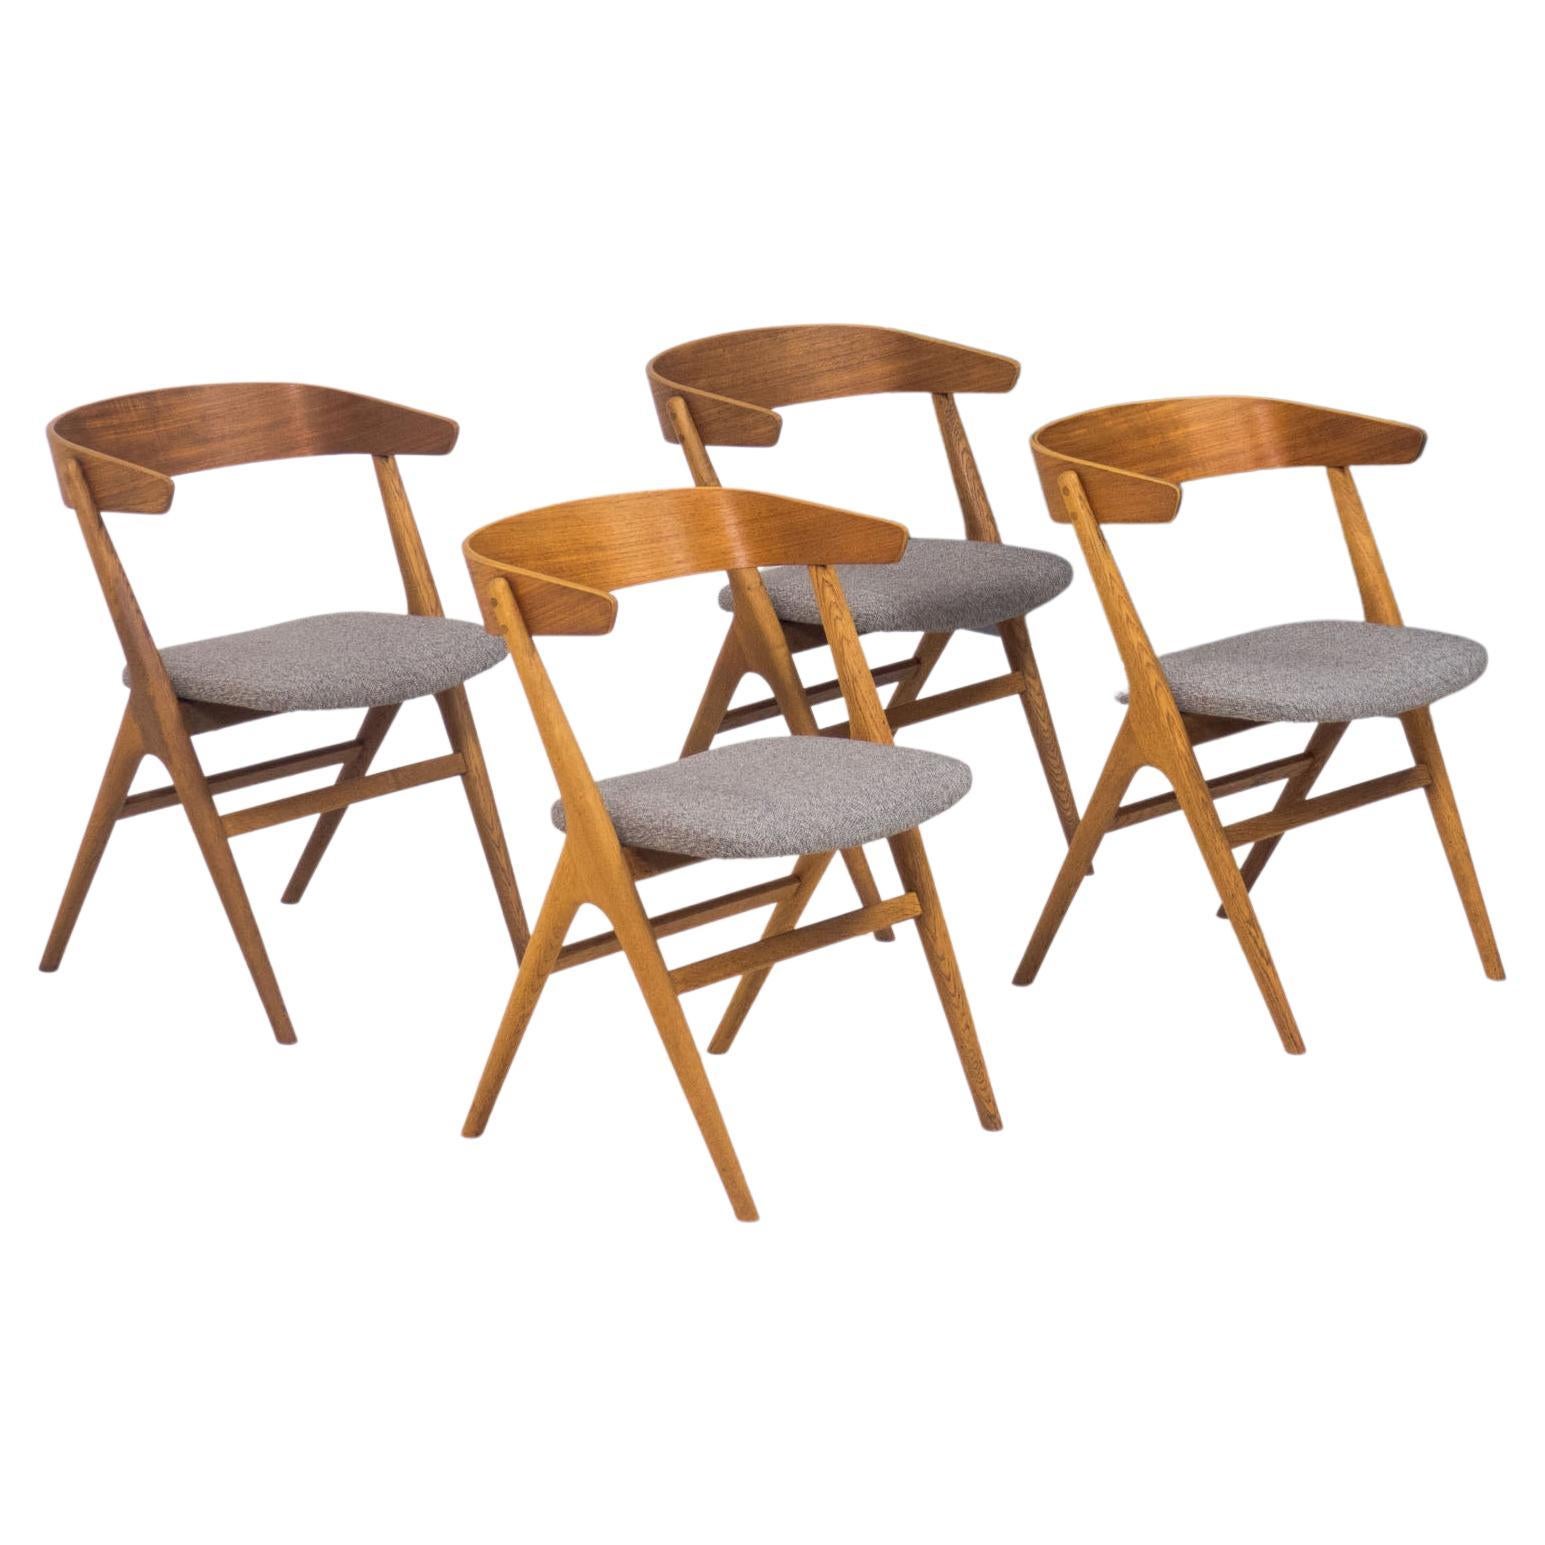 Sibast Møbler model ‘no. 9’ teak & oak dining chairs – Helge Sibast 